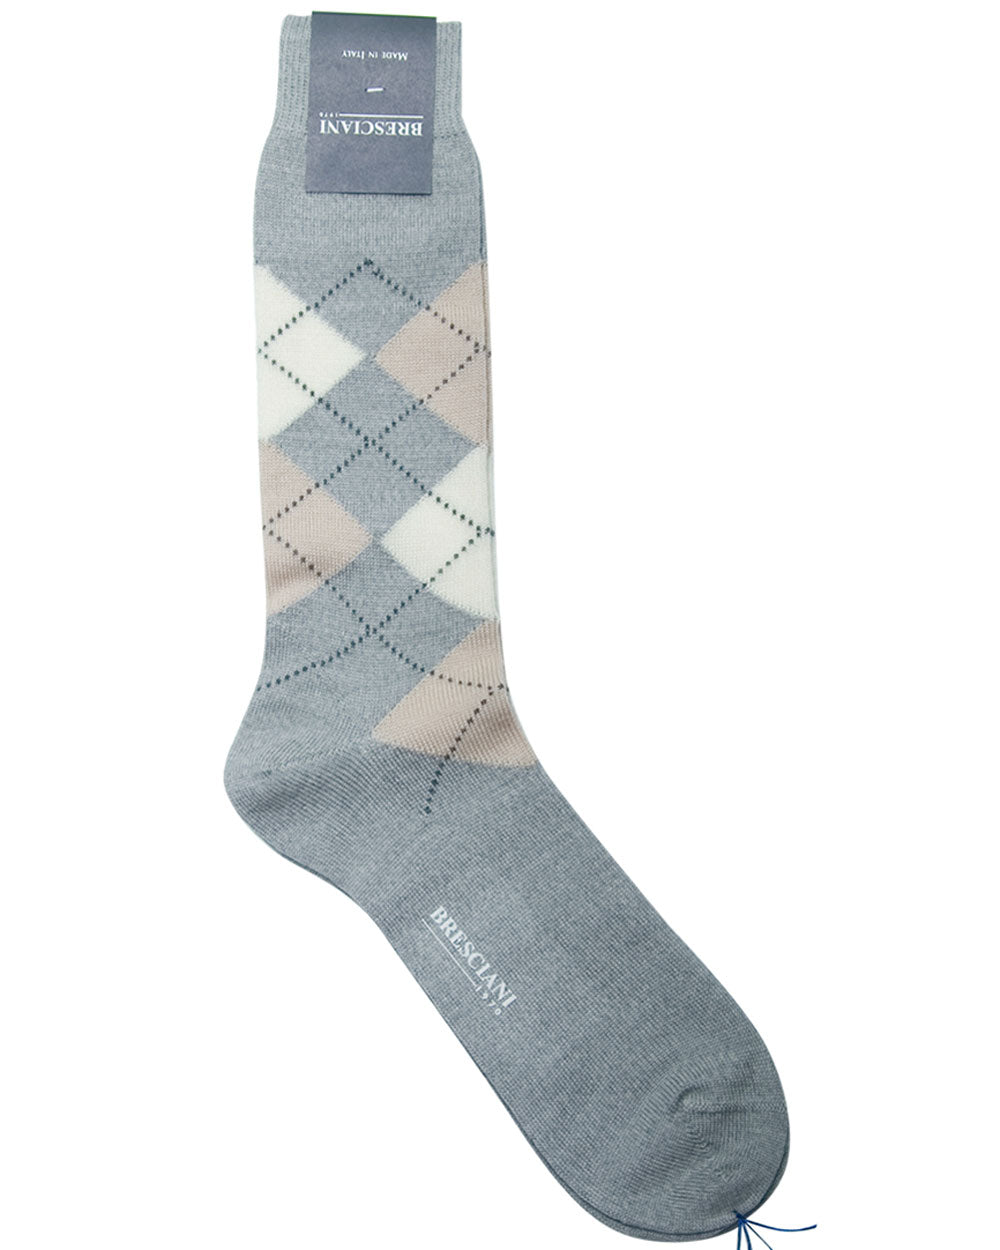 Merino Wool Argyle Socks in Grey